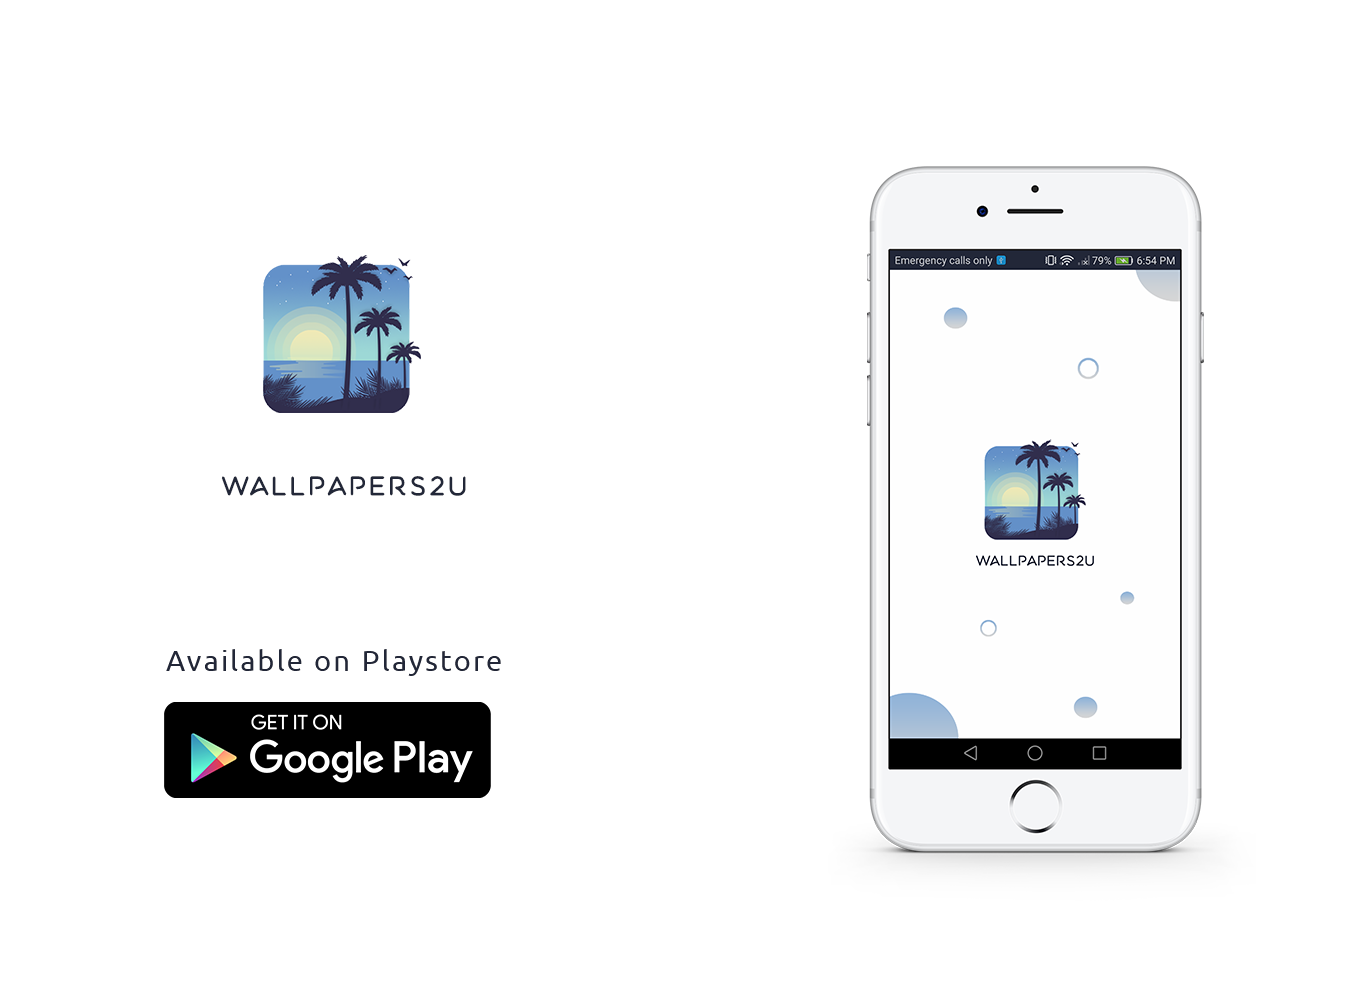 Wallpapers2u - Complete Wallpaper app with Admin Panel - 5